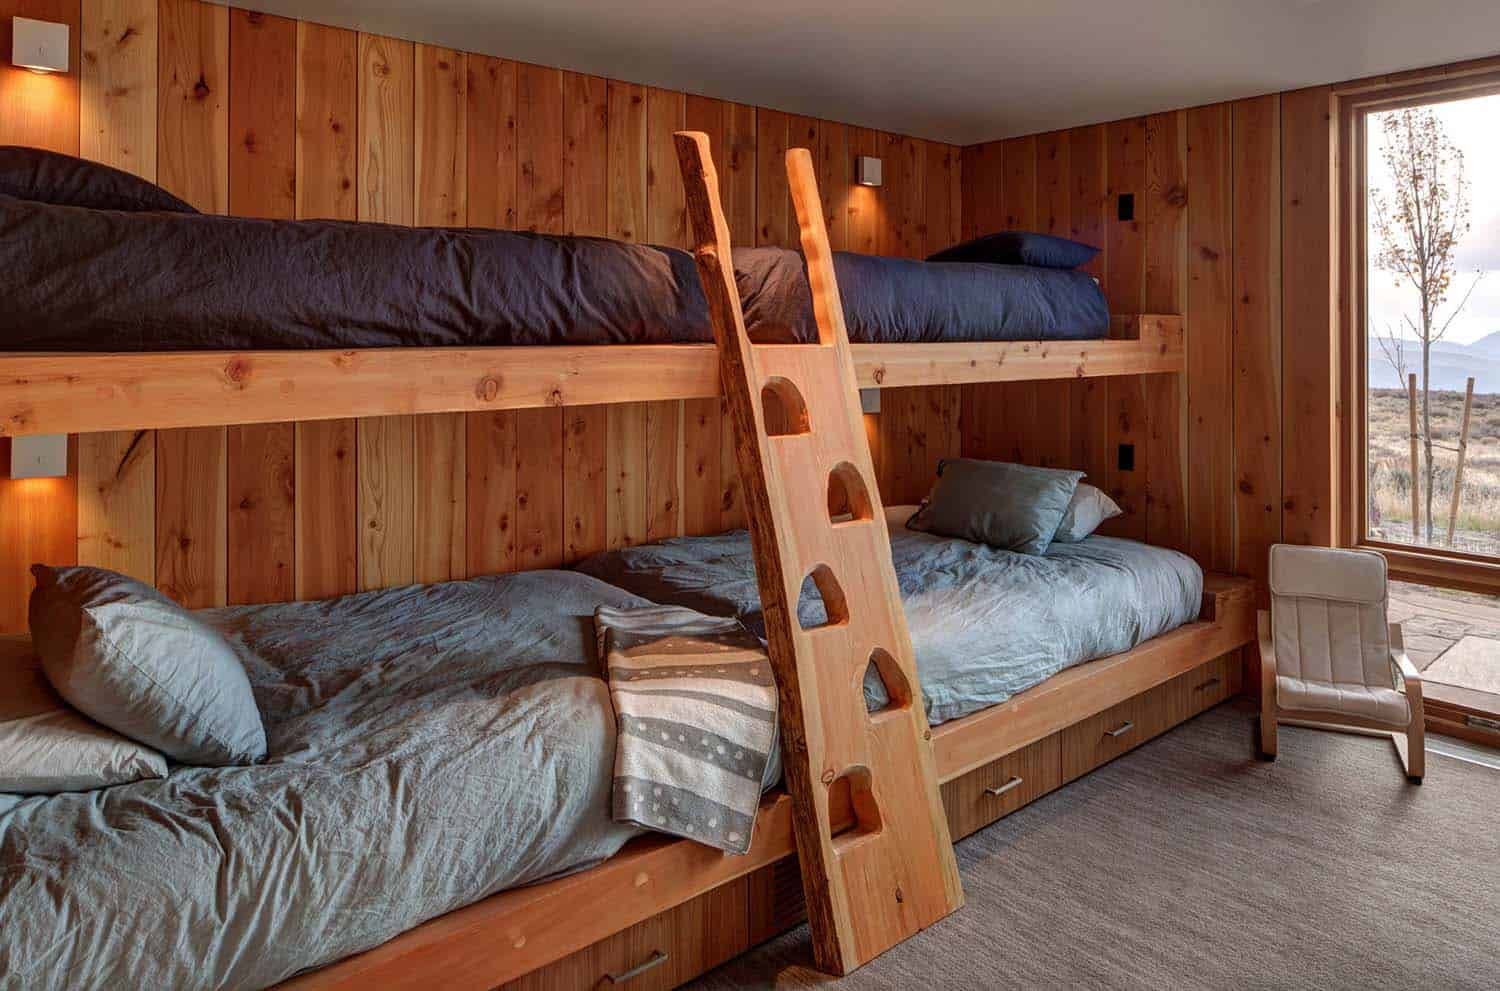  Modern Rustic Log Home-Shubin Donaldson Architects-23-1 Kindesign